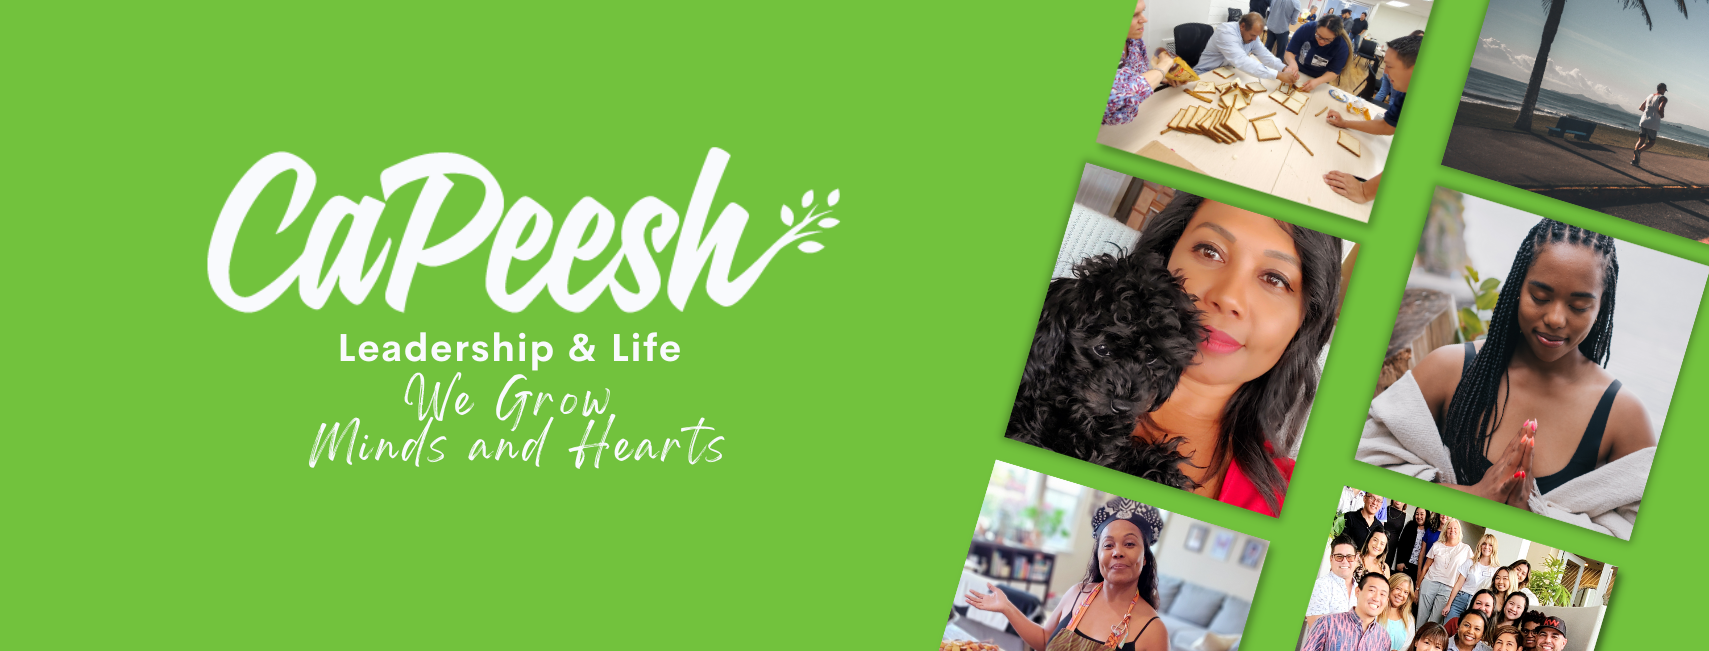 Capeesh Website Banner